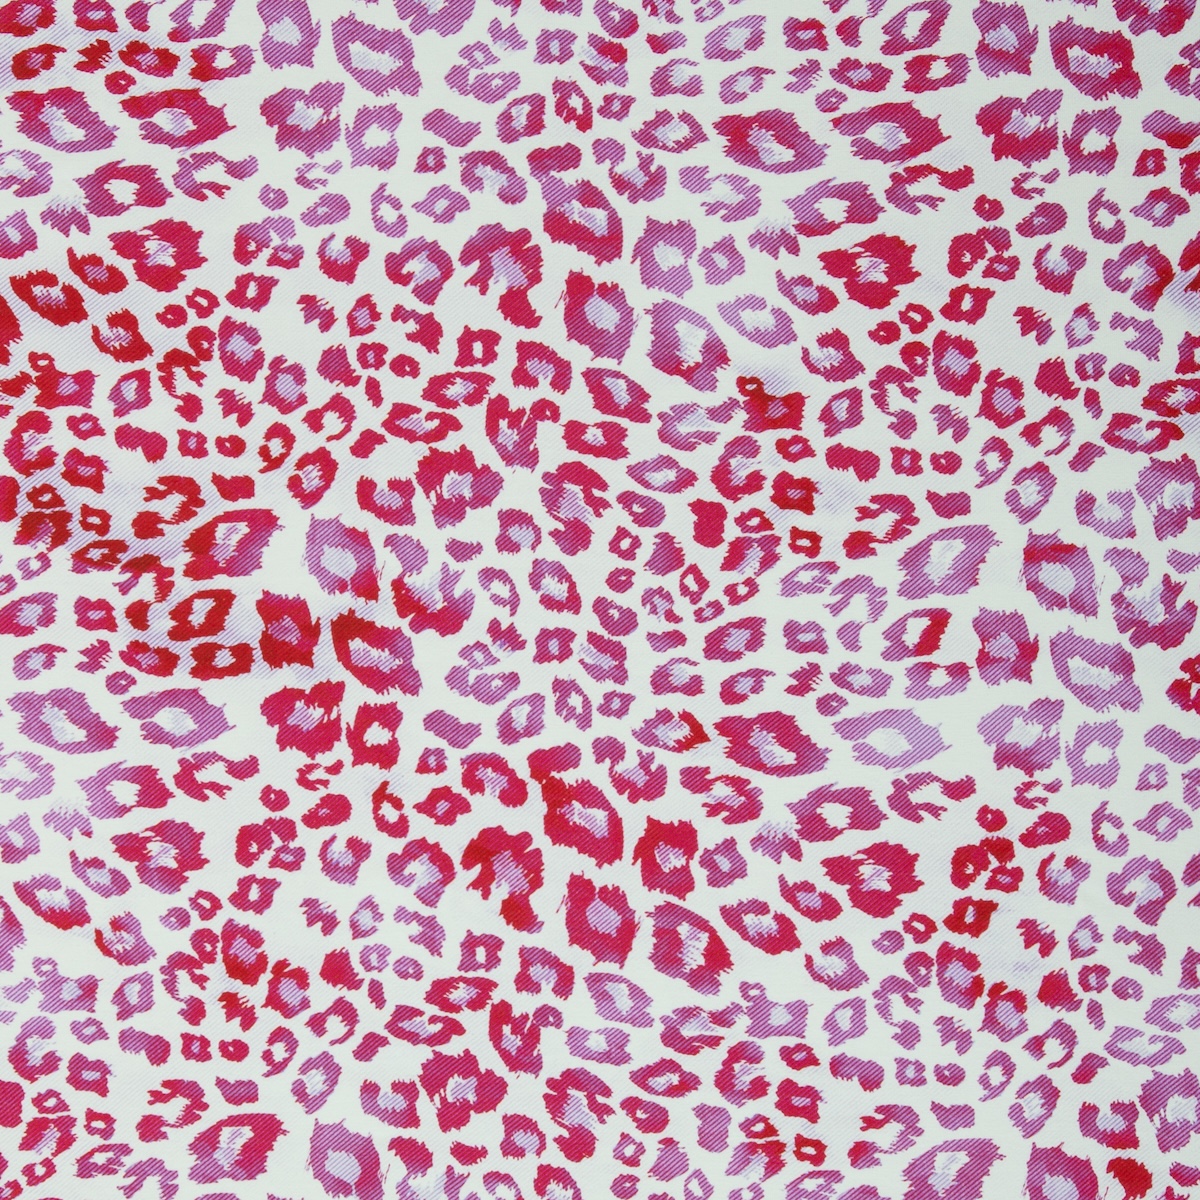 Baumwolljersey Madrid - Leoparden Muster pink/weiß Jeans - Meterware (0,50m)